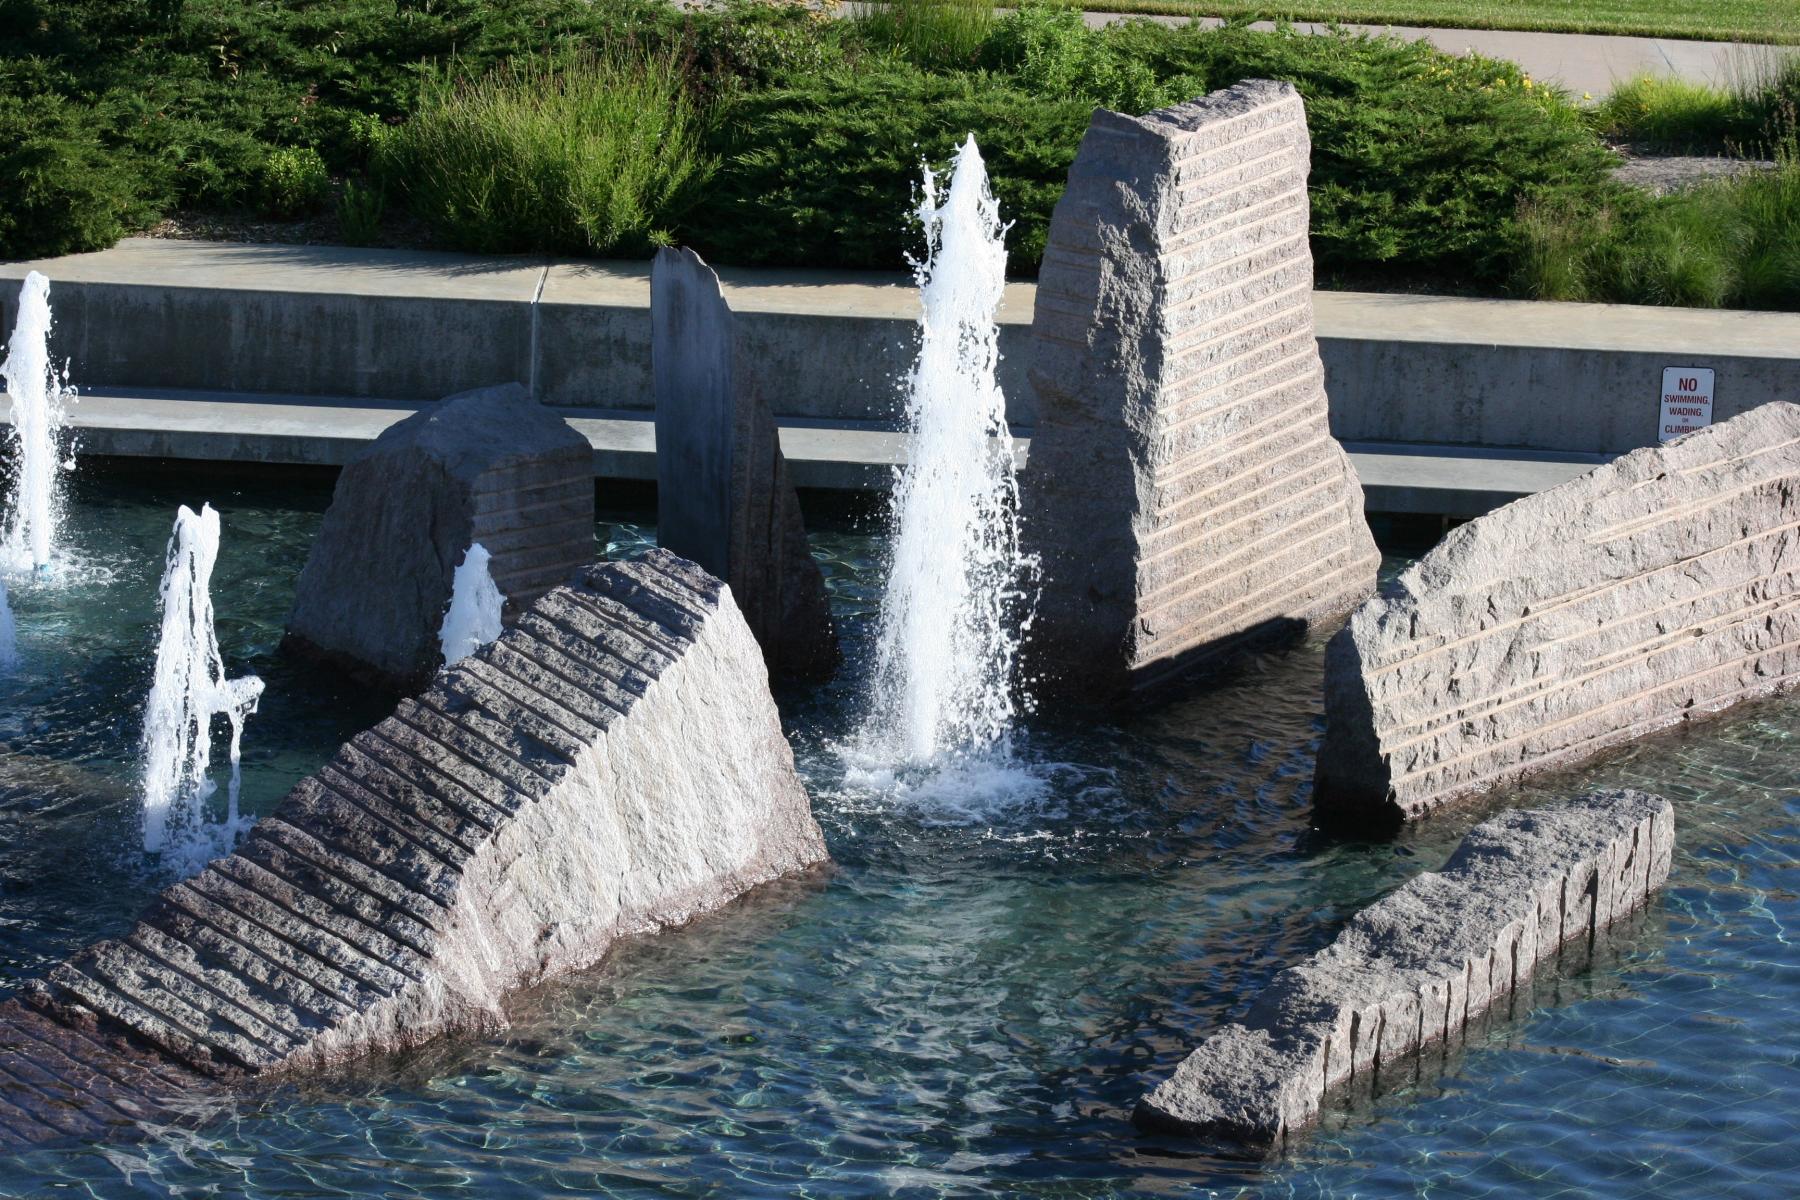 Nebraska Union Fountain